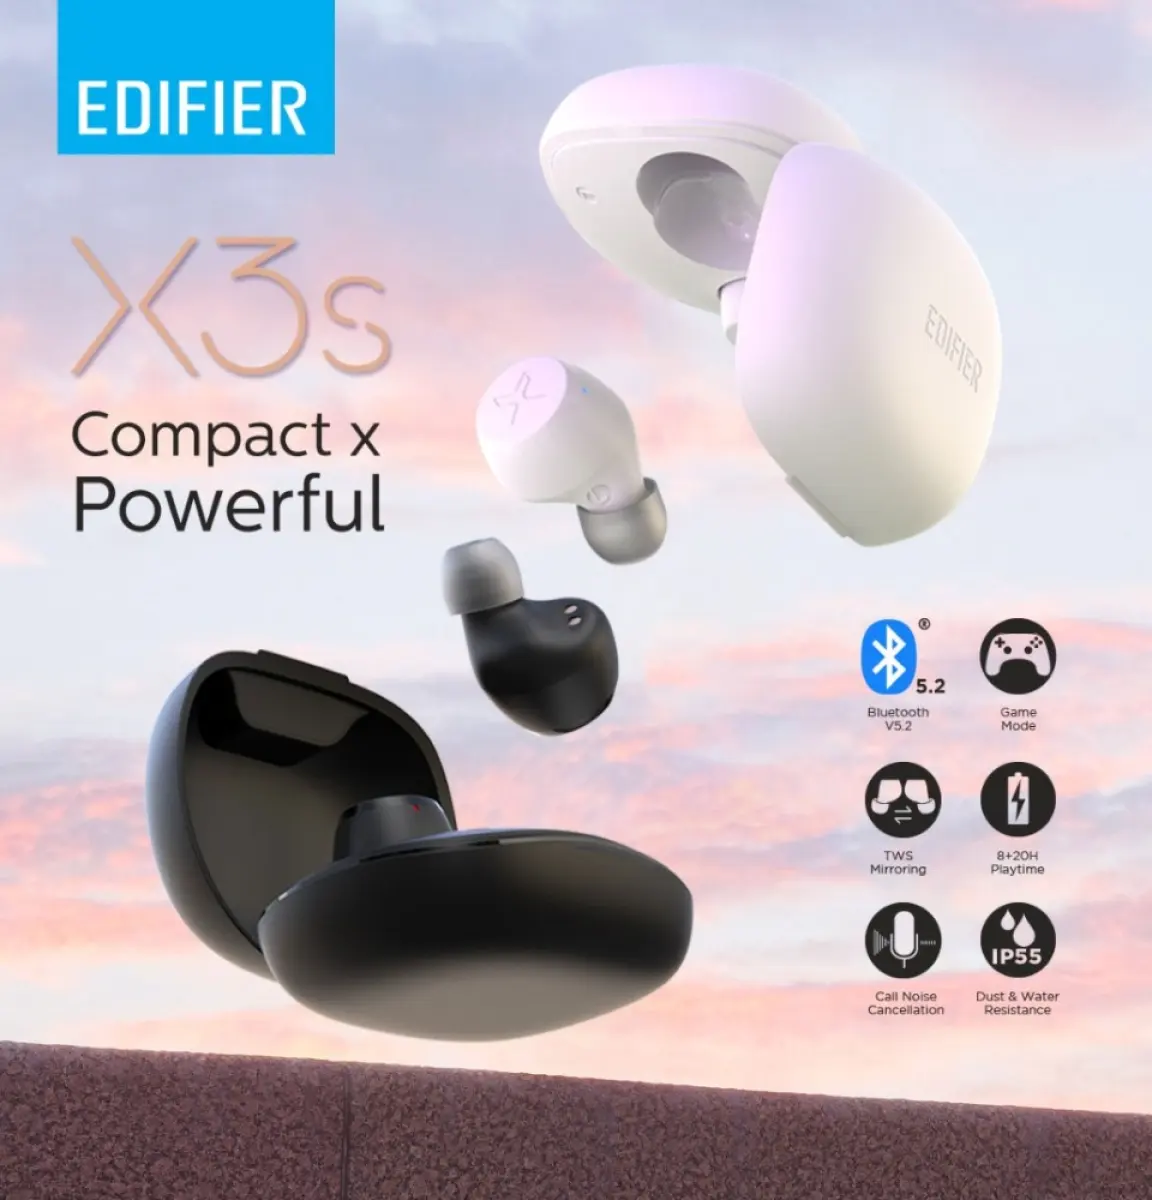 Edifier X3 Plus / X3Plus x3s - True Wireless Stereo Earphone Earbud Bluetooth 5.0 Qualcomm aptX Answer Call Mic IP54 Touch Control Voice assistant Sport [Original 1 Year Malaysia Warranty]